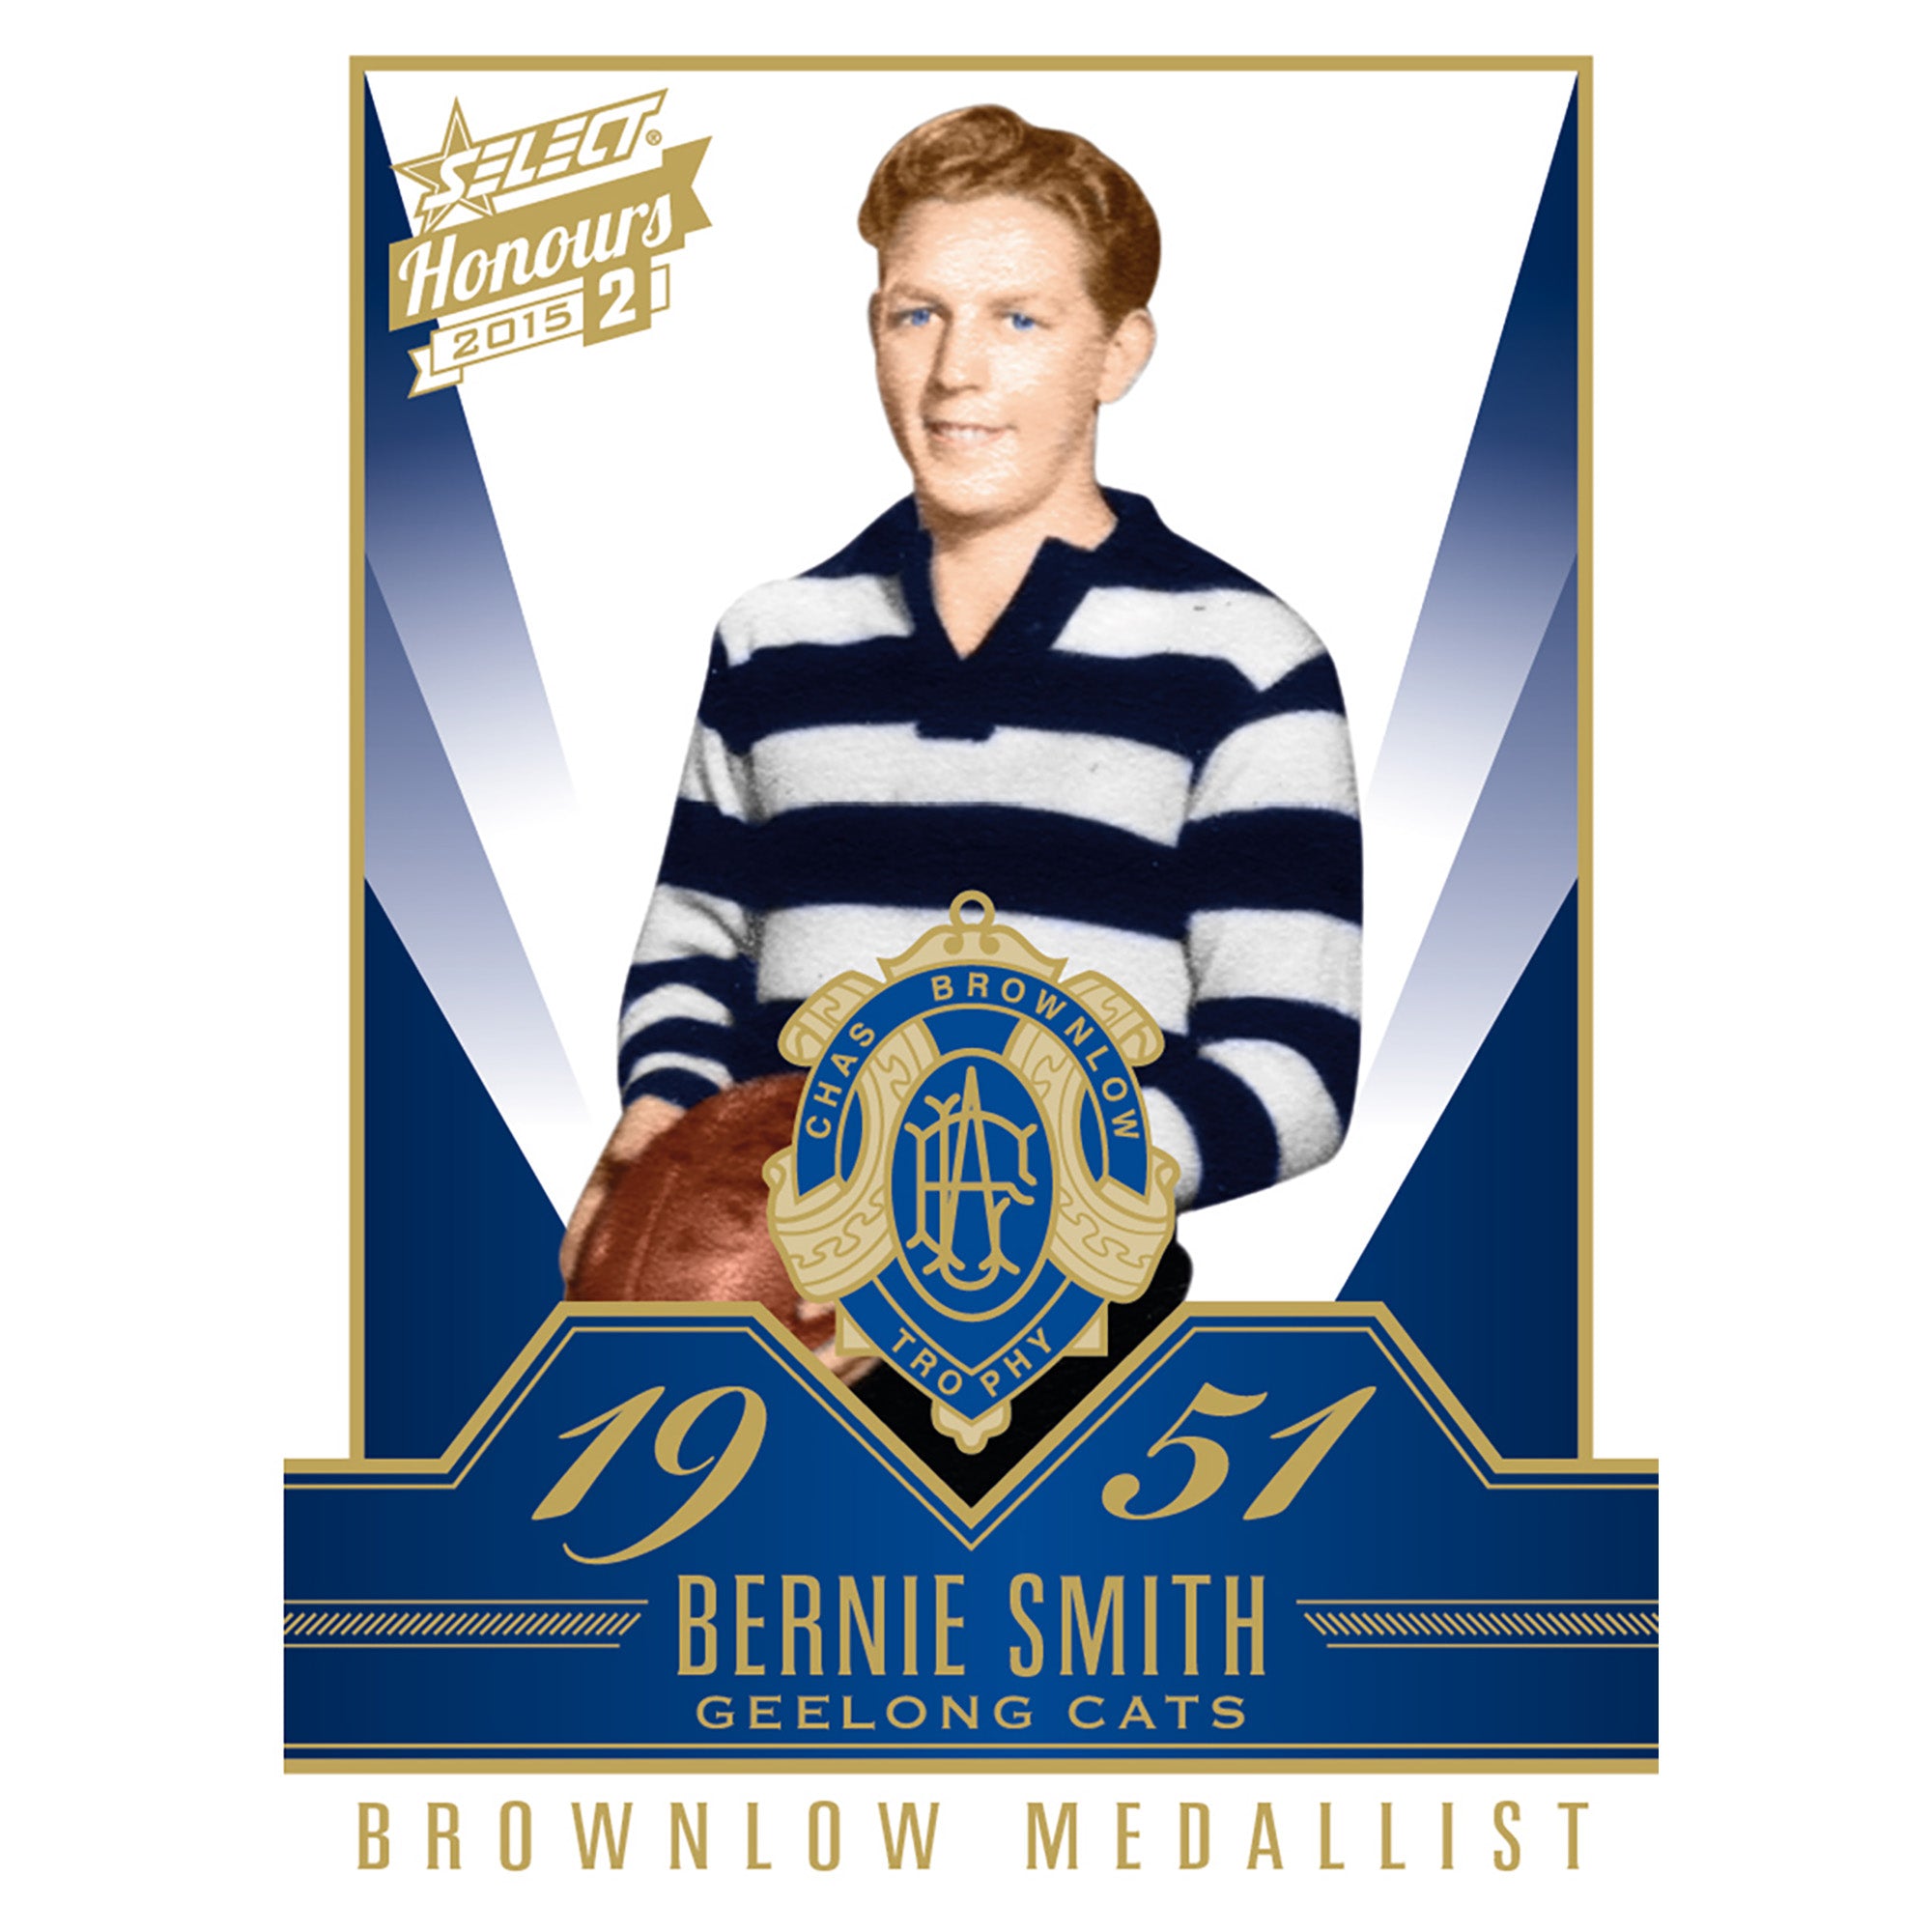 AFL 2015 Select Honours 2 Brownlow Gallery Bernie Smith Geelong BG68